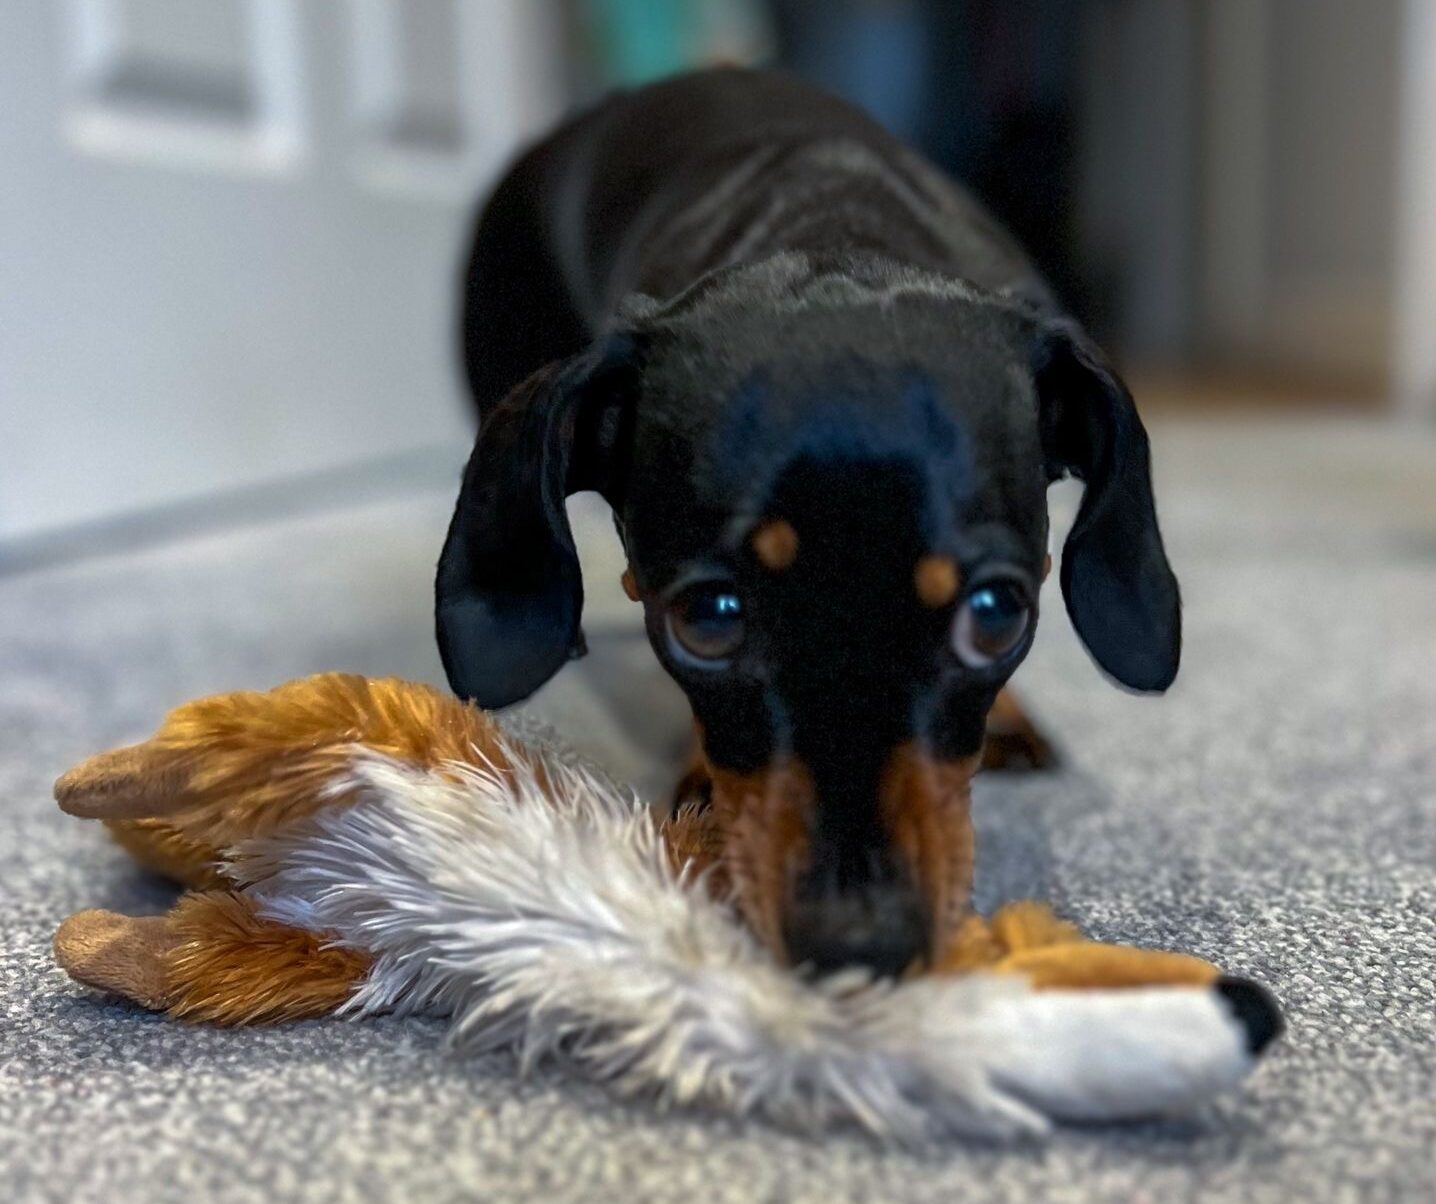 Frankie the sausage dog with mr fox toy